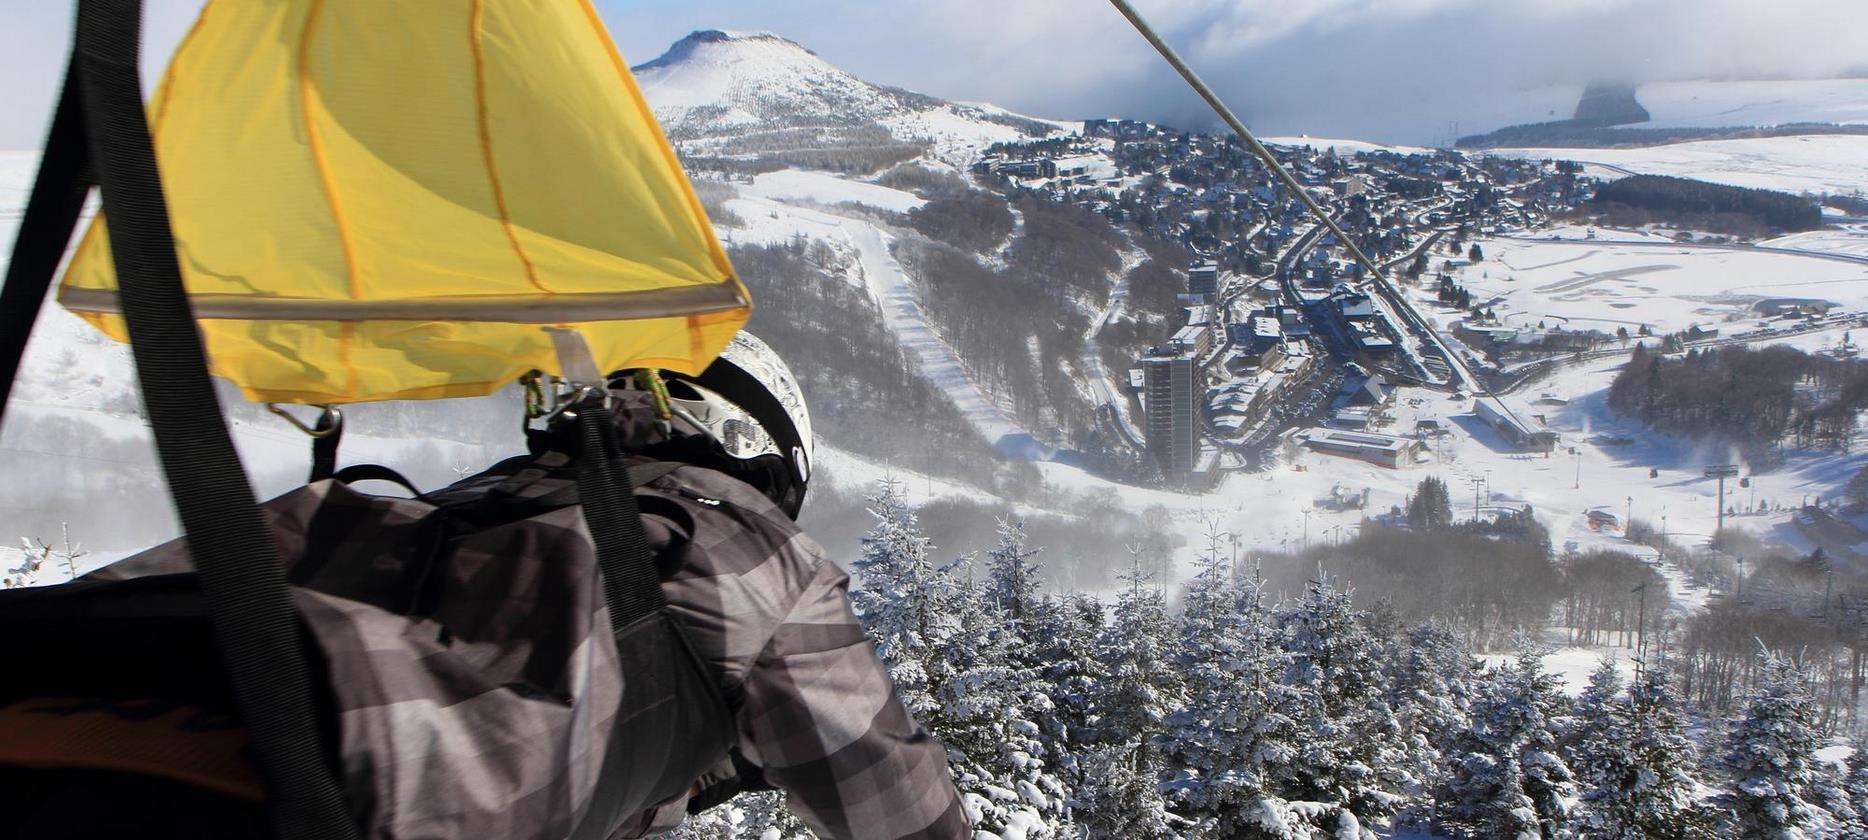 Super Besse - start of the Zipline and view of the ski resort of Super Besse